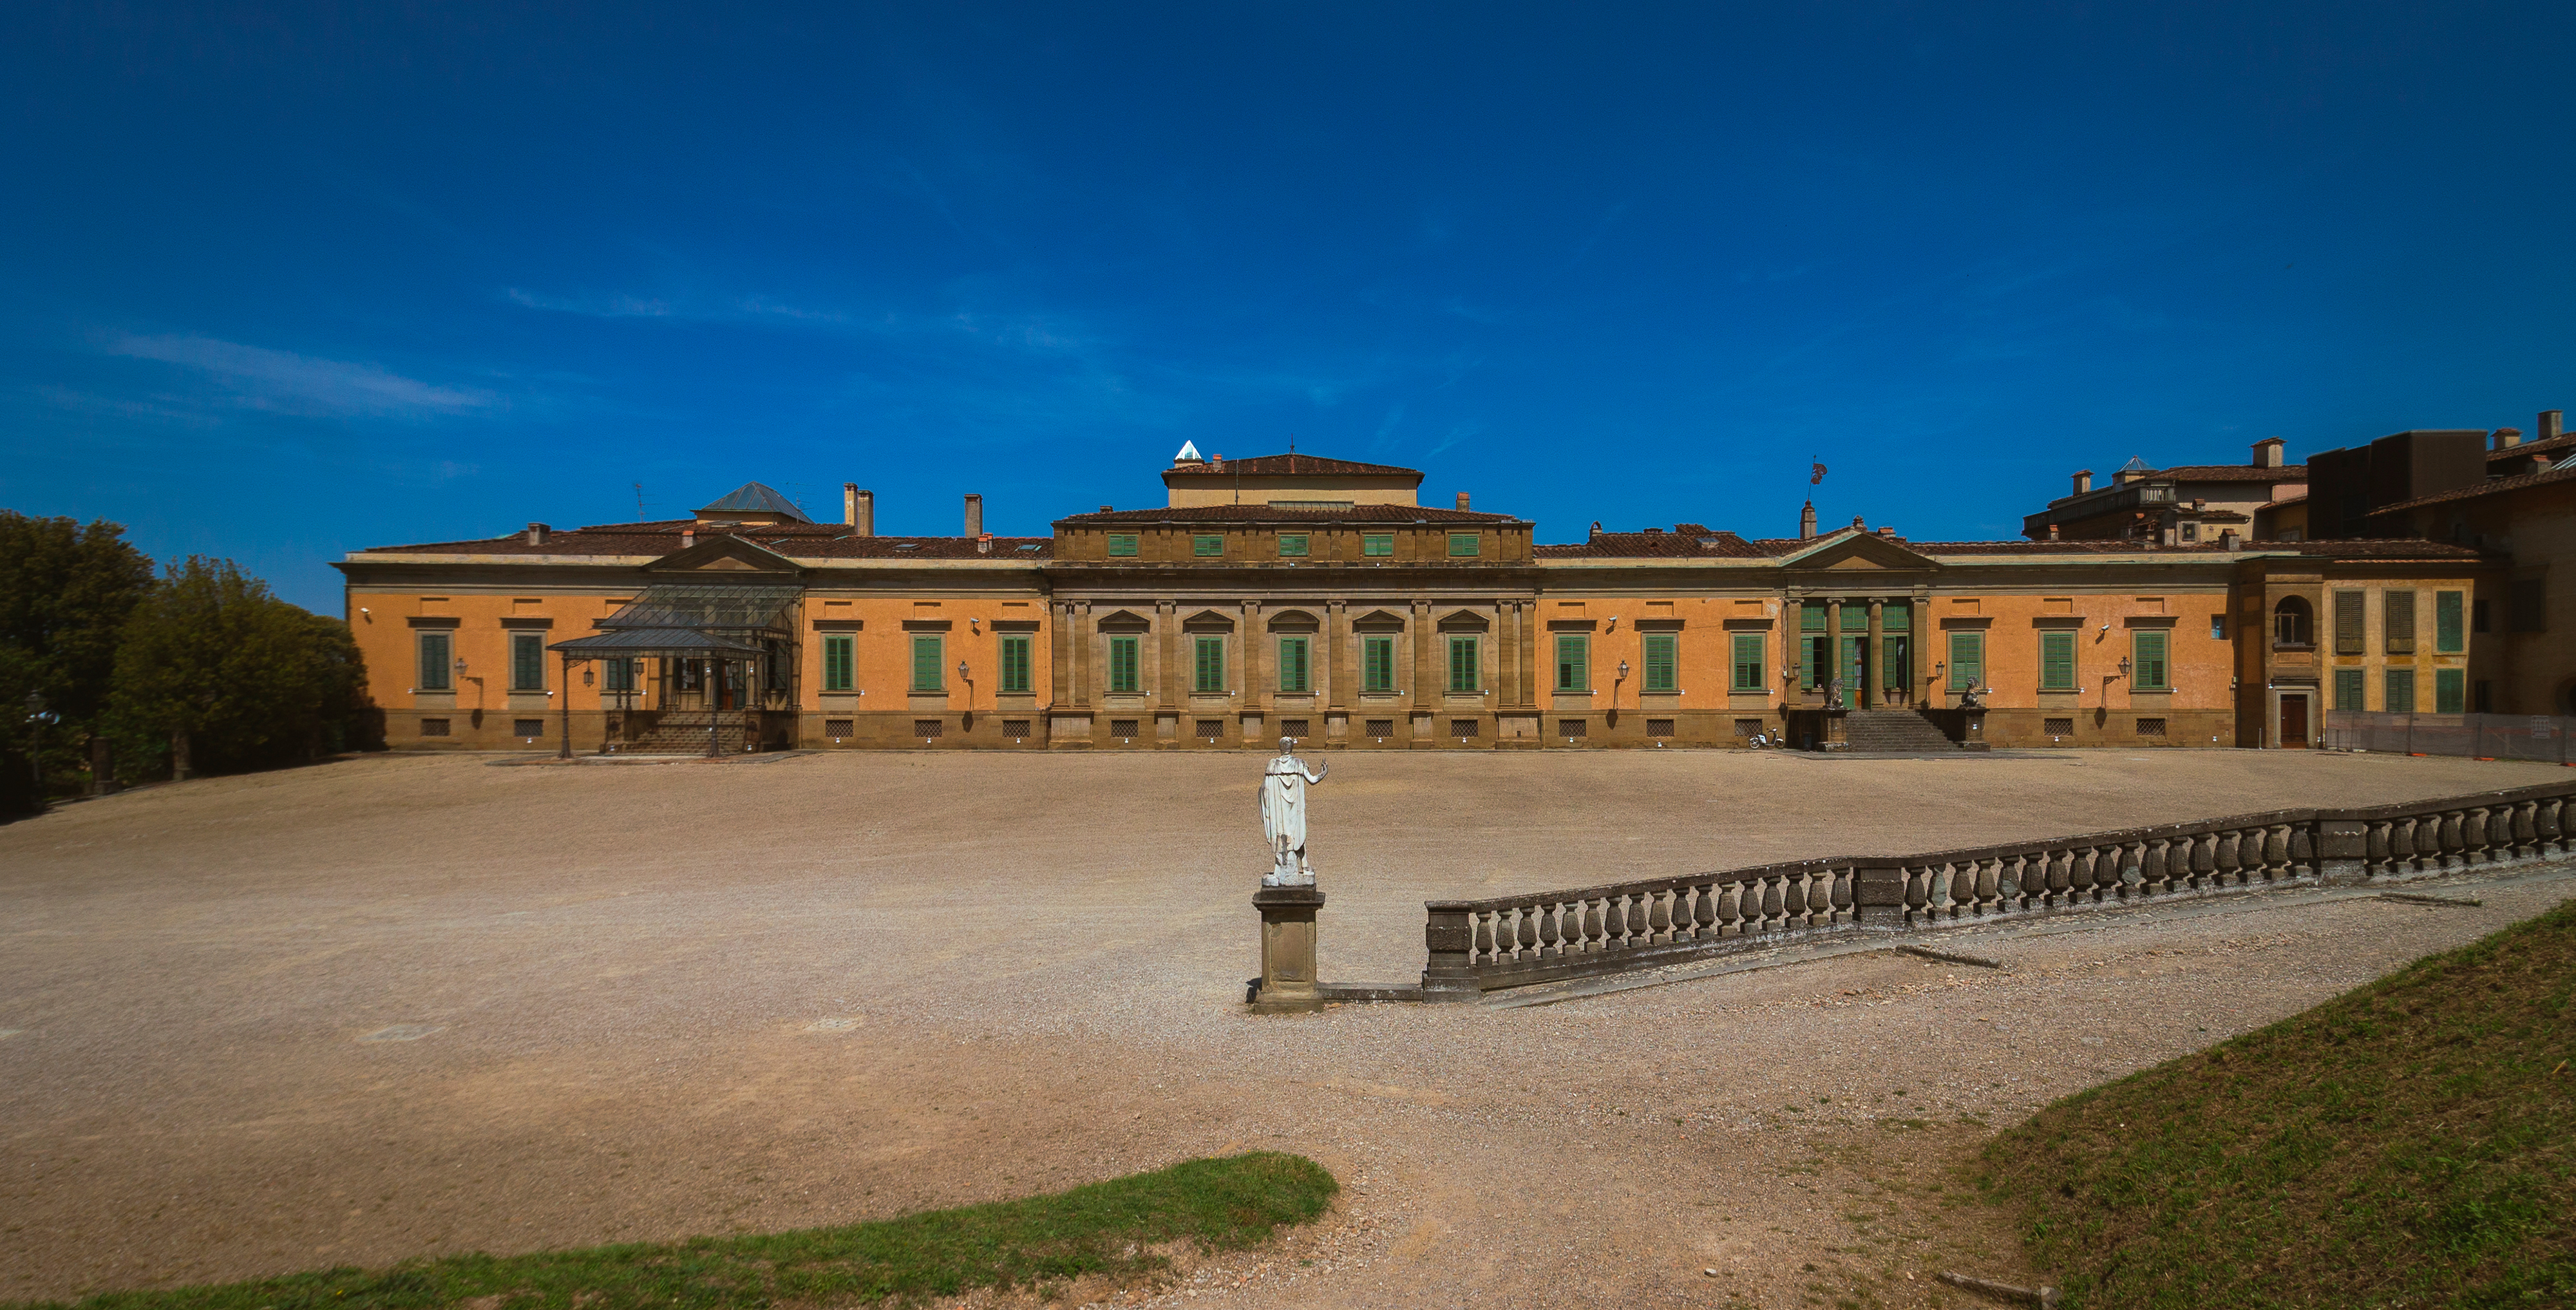 The Palazzina della Meridiana in Pitti Palace